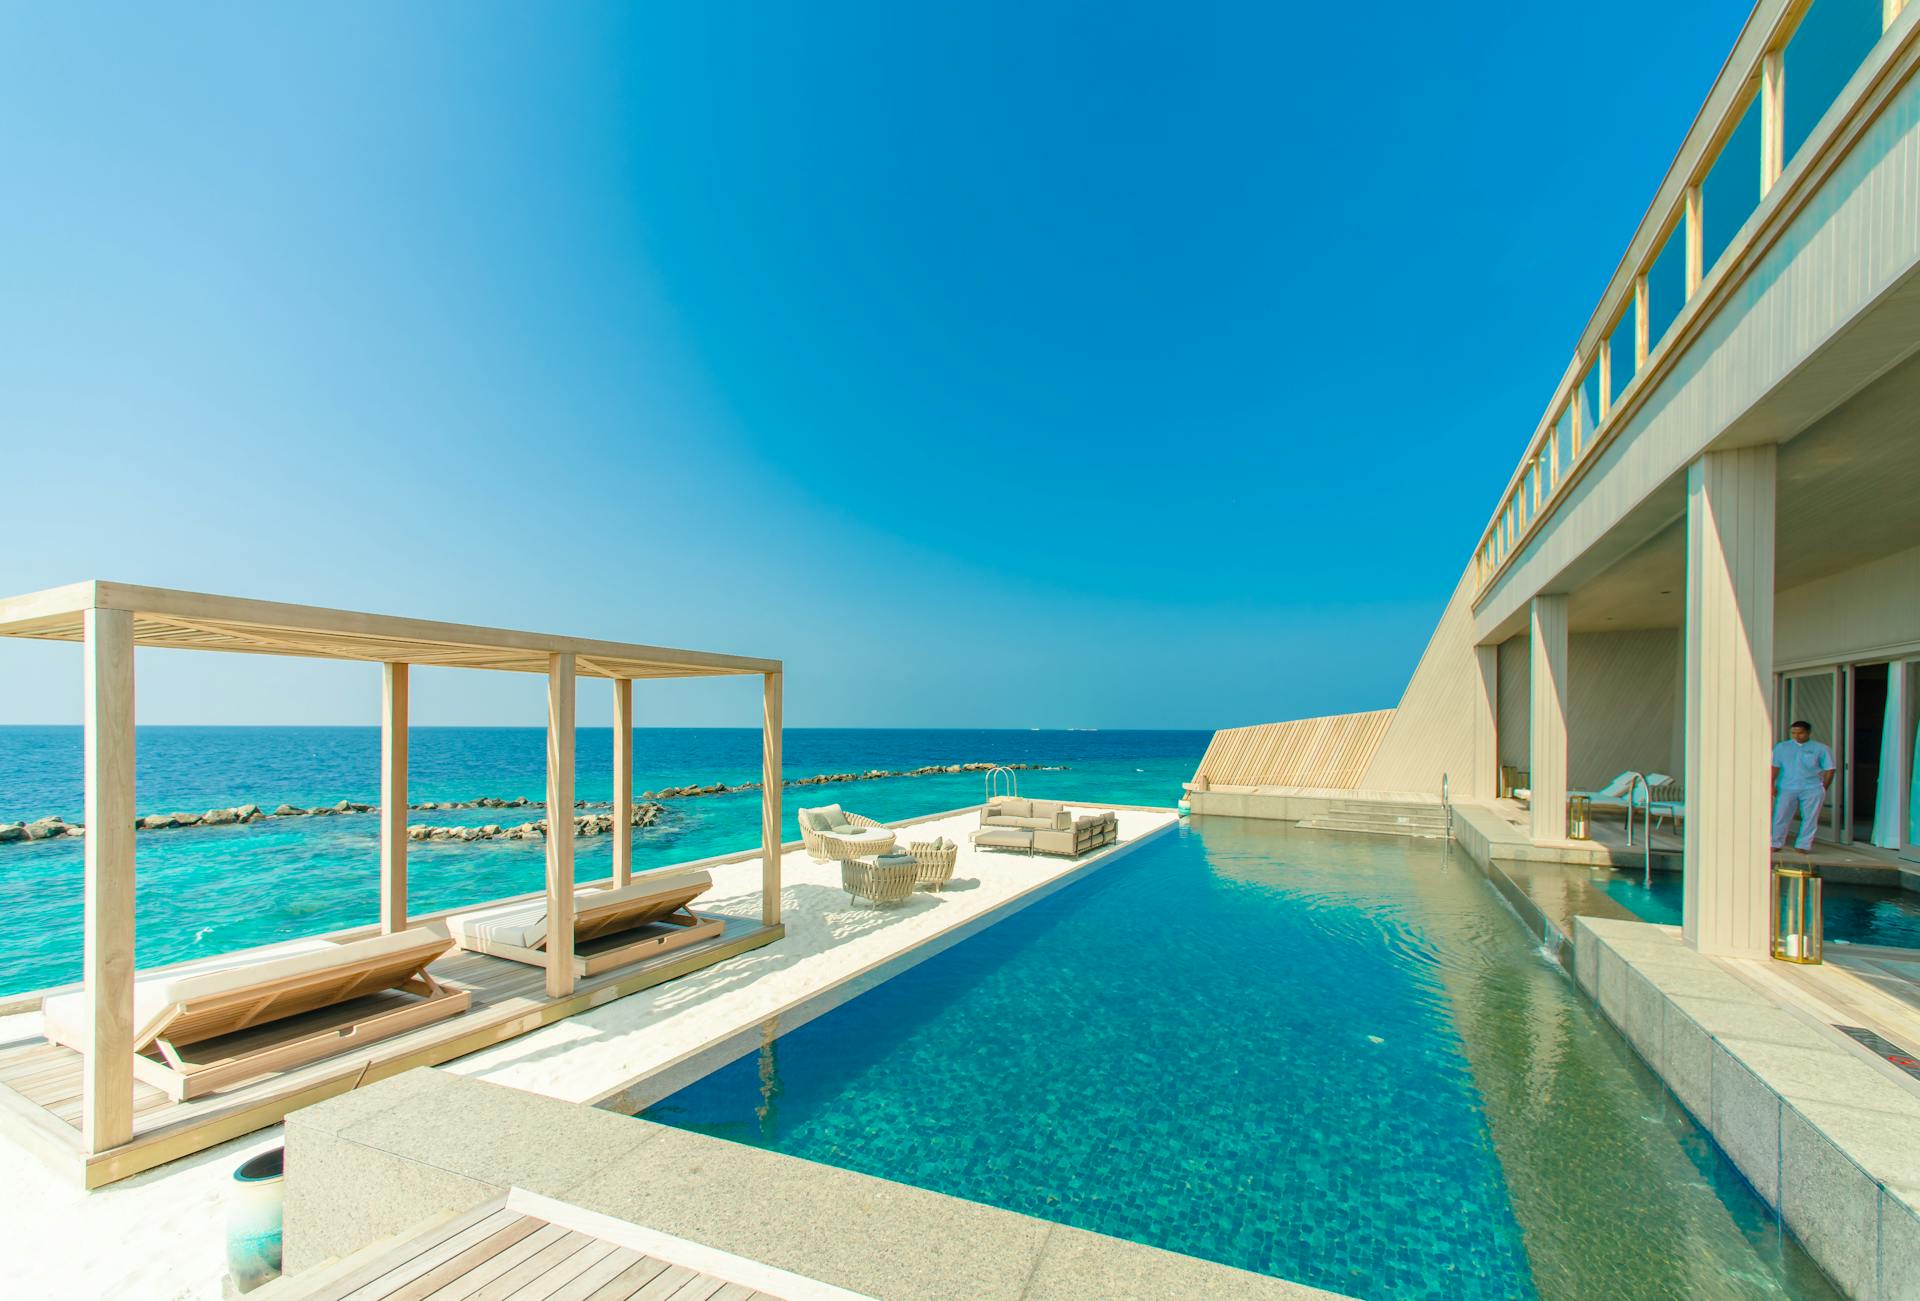 A beach resort hotel | Source: Pexels